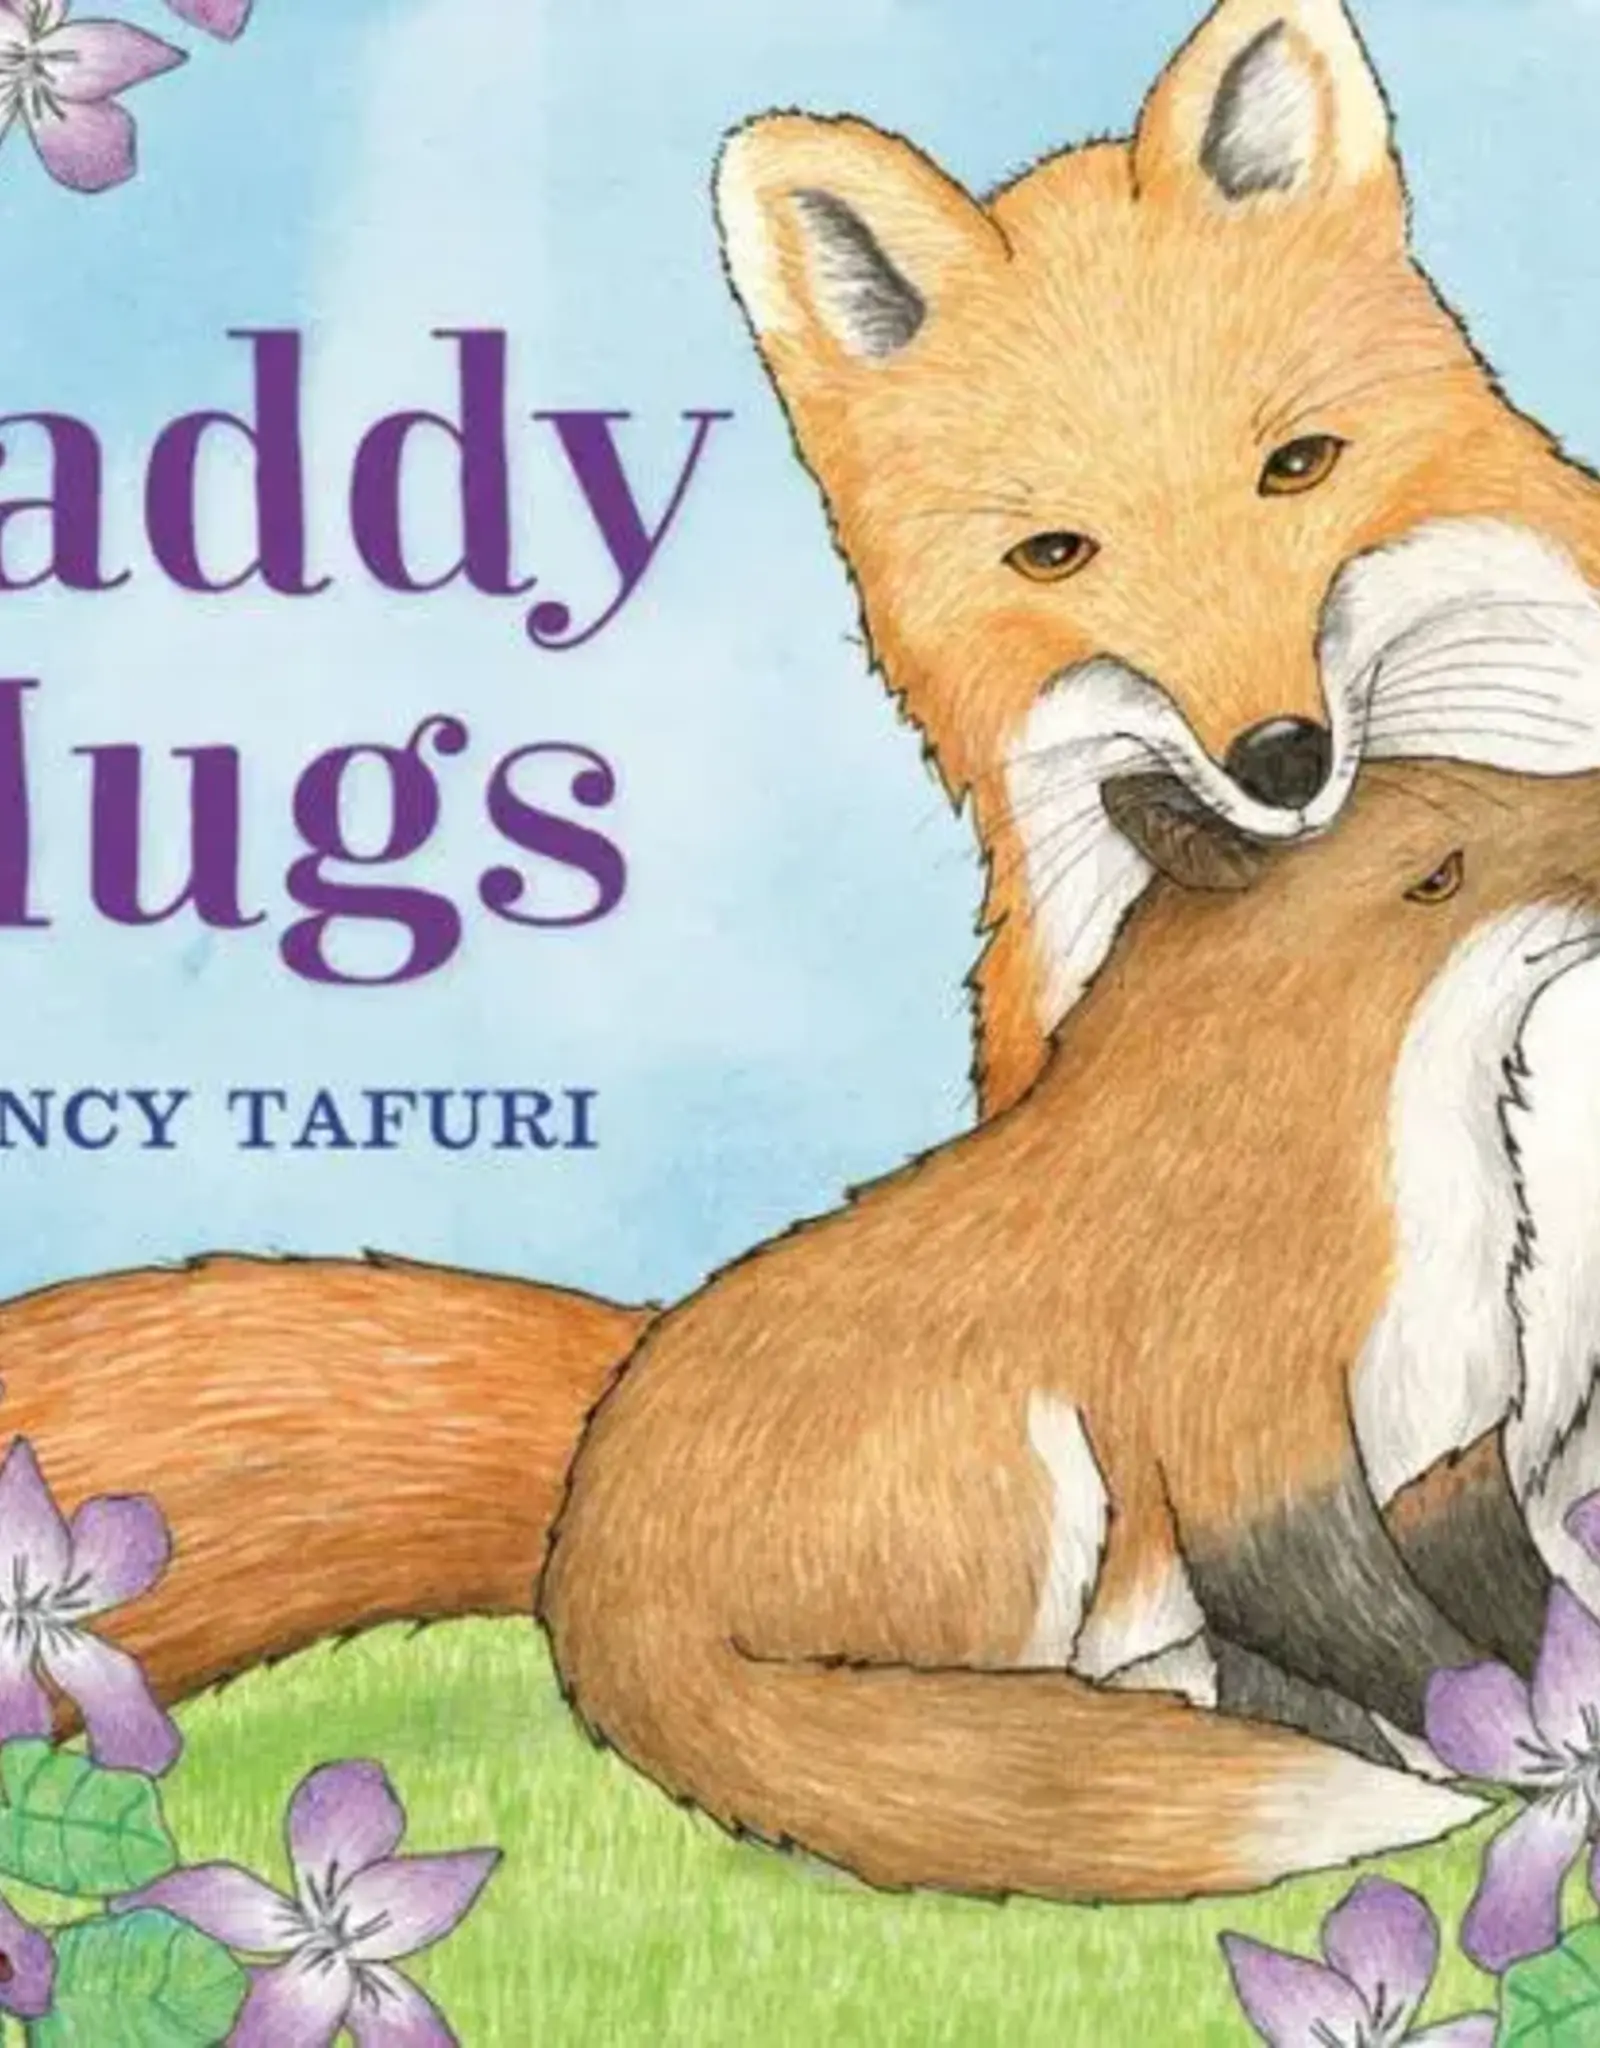 Penguin Random House BB Daddy Hugs